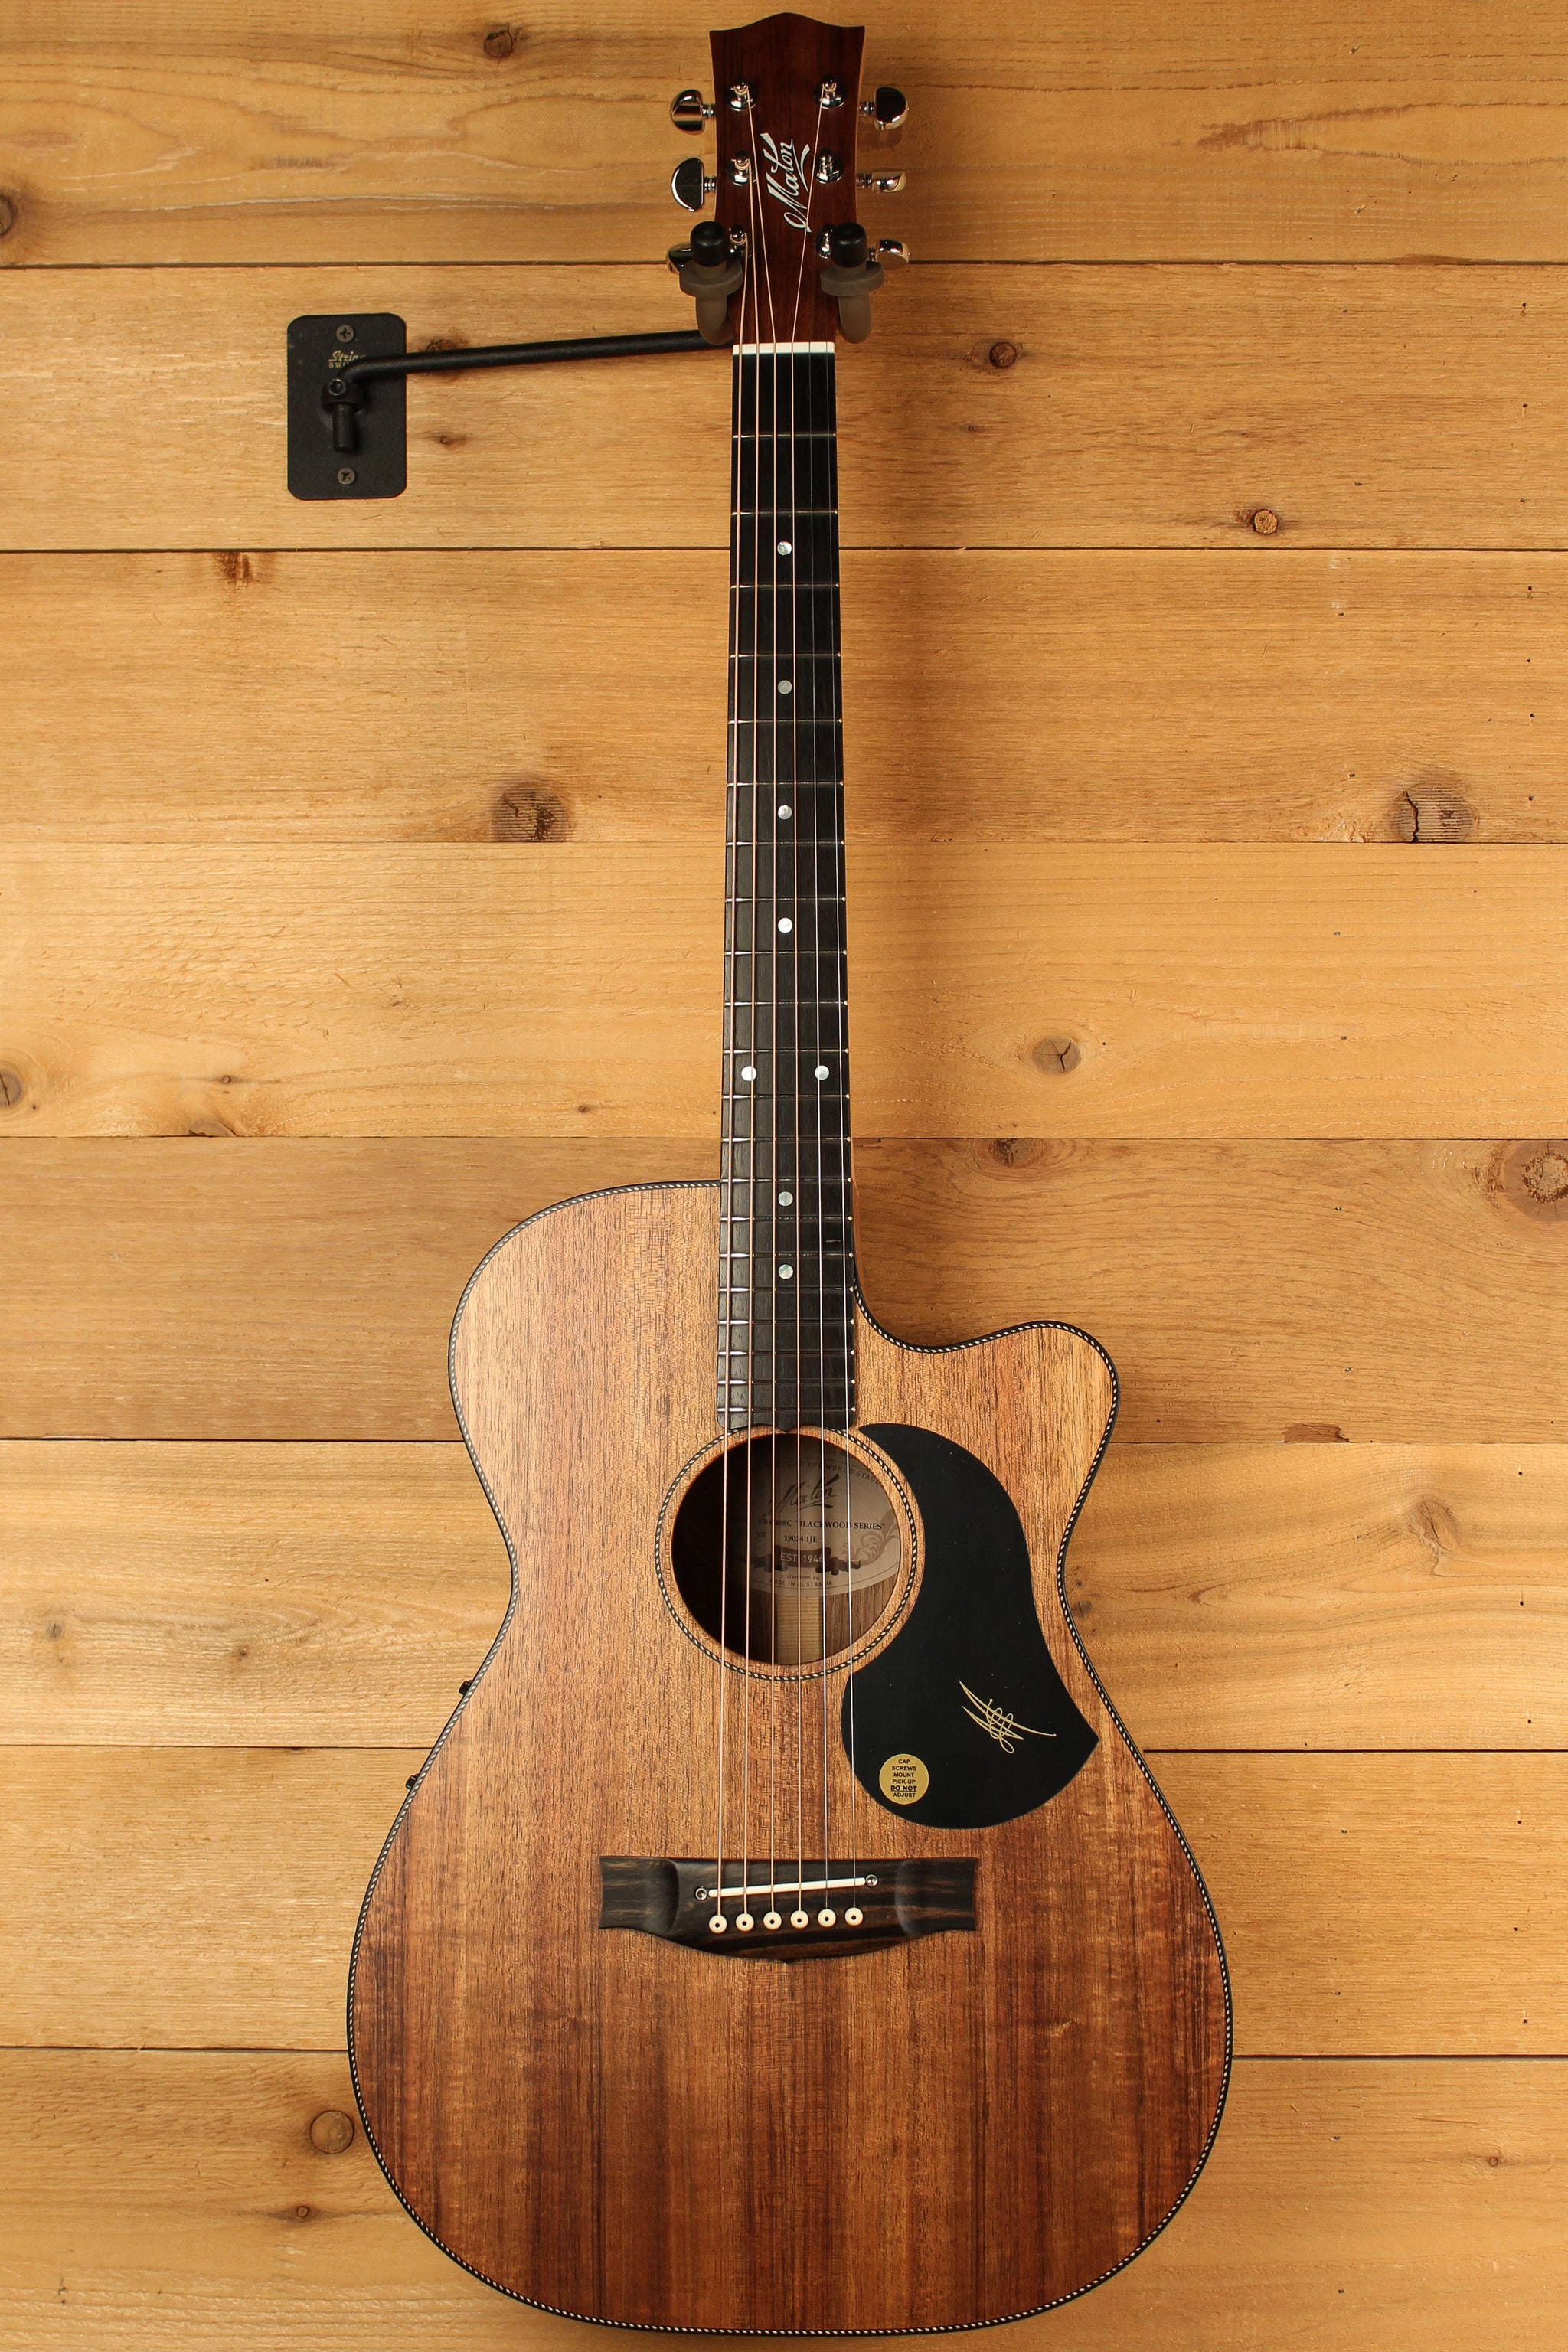 Maton EBW808 Cutaway Guitar w/ Blackwood Top, Back & Sides w/ AP5 Pro Pickup System ID-13460 - Artisan Guitars